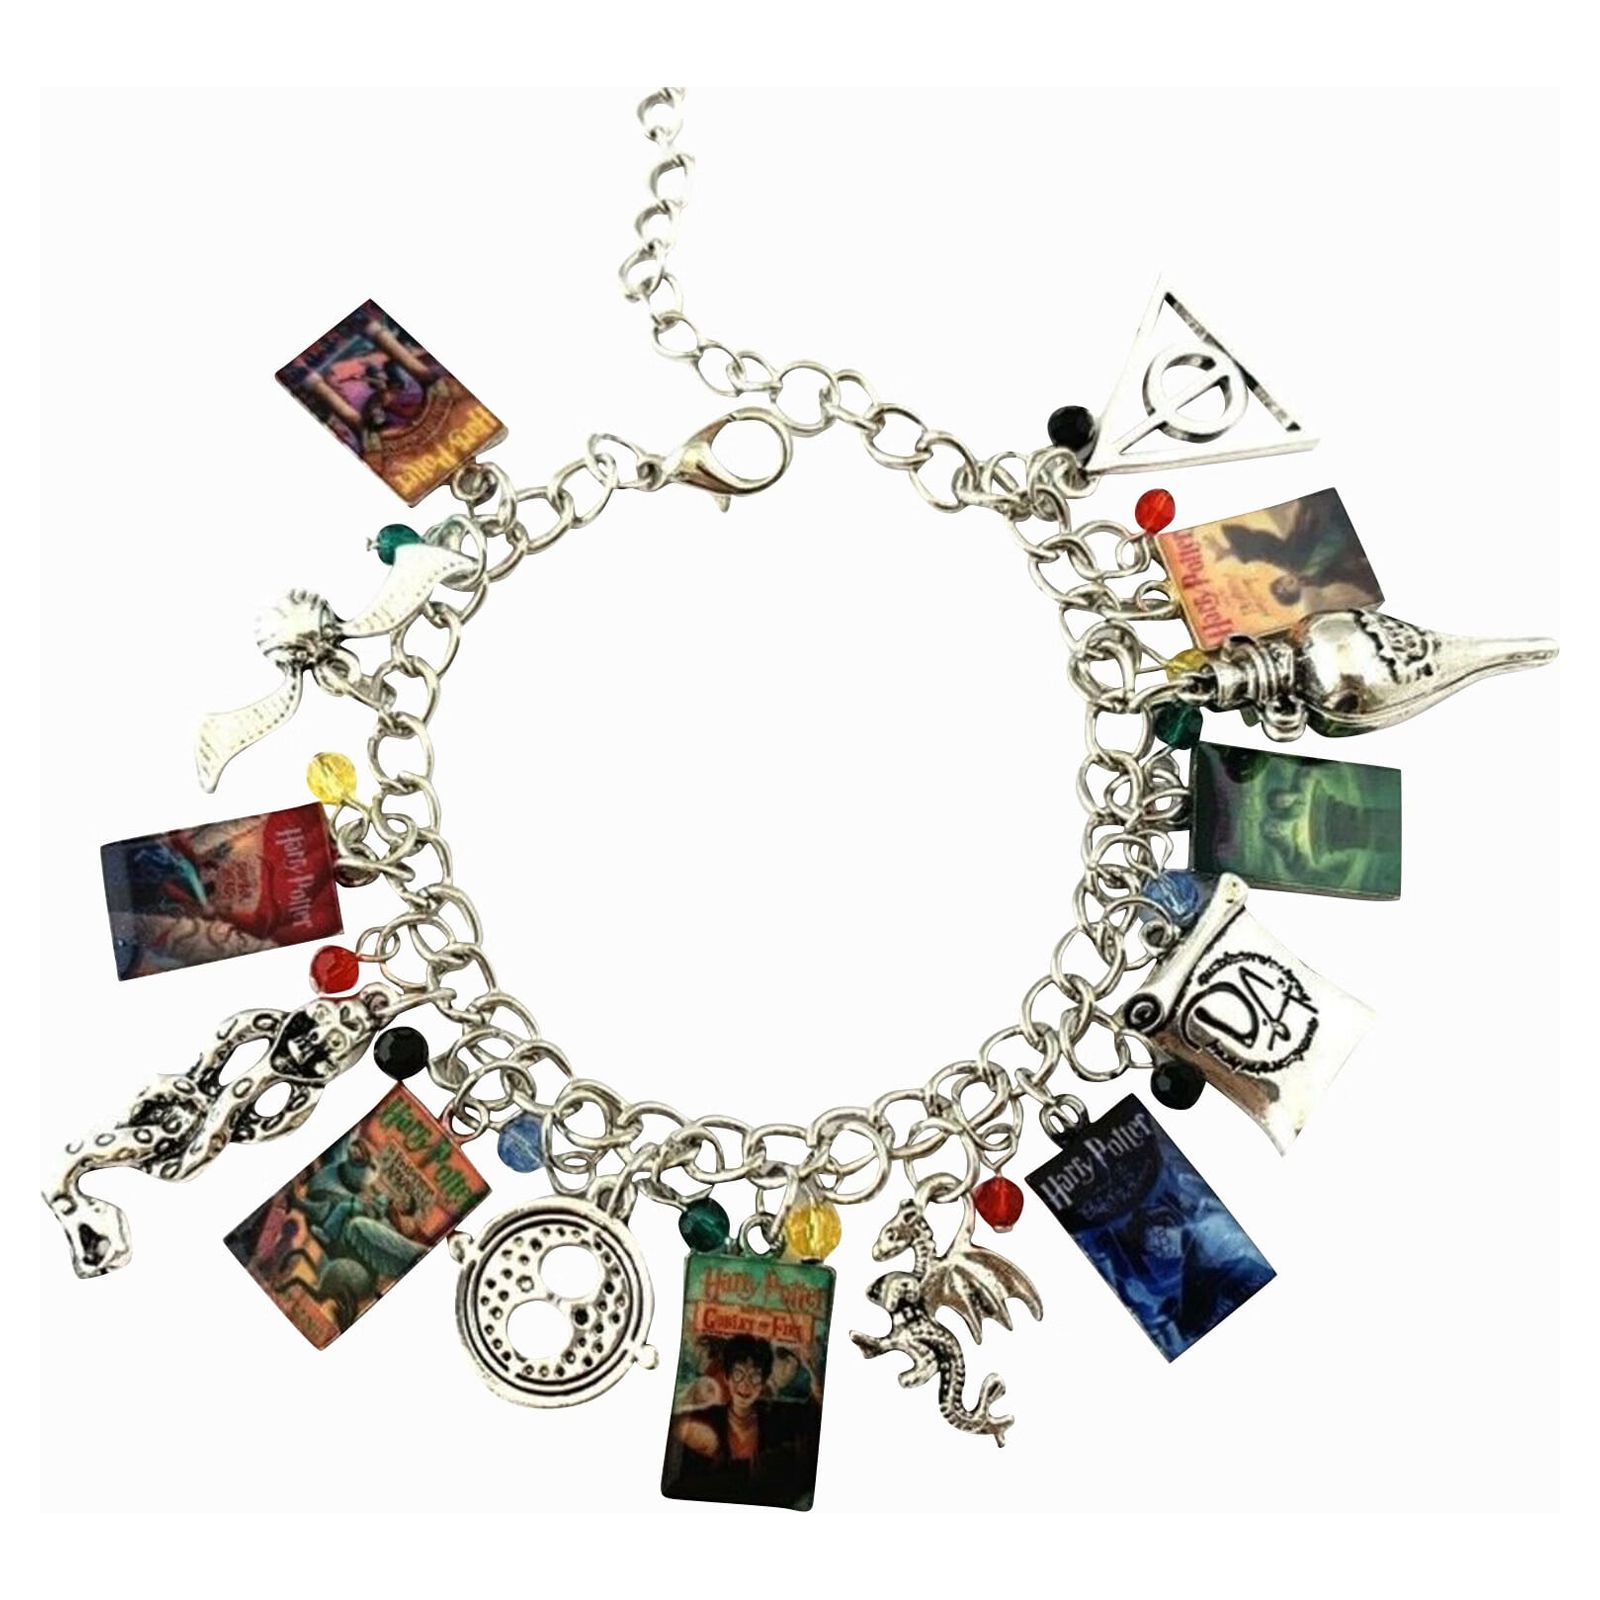 Harry Potter Books and Logo Charm Metal Novelty Charm Bracelet - image 2 of 3